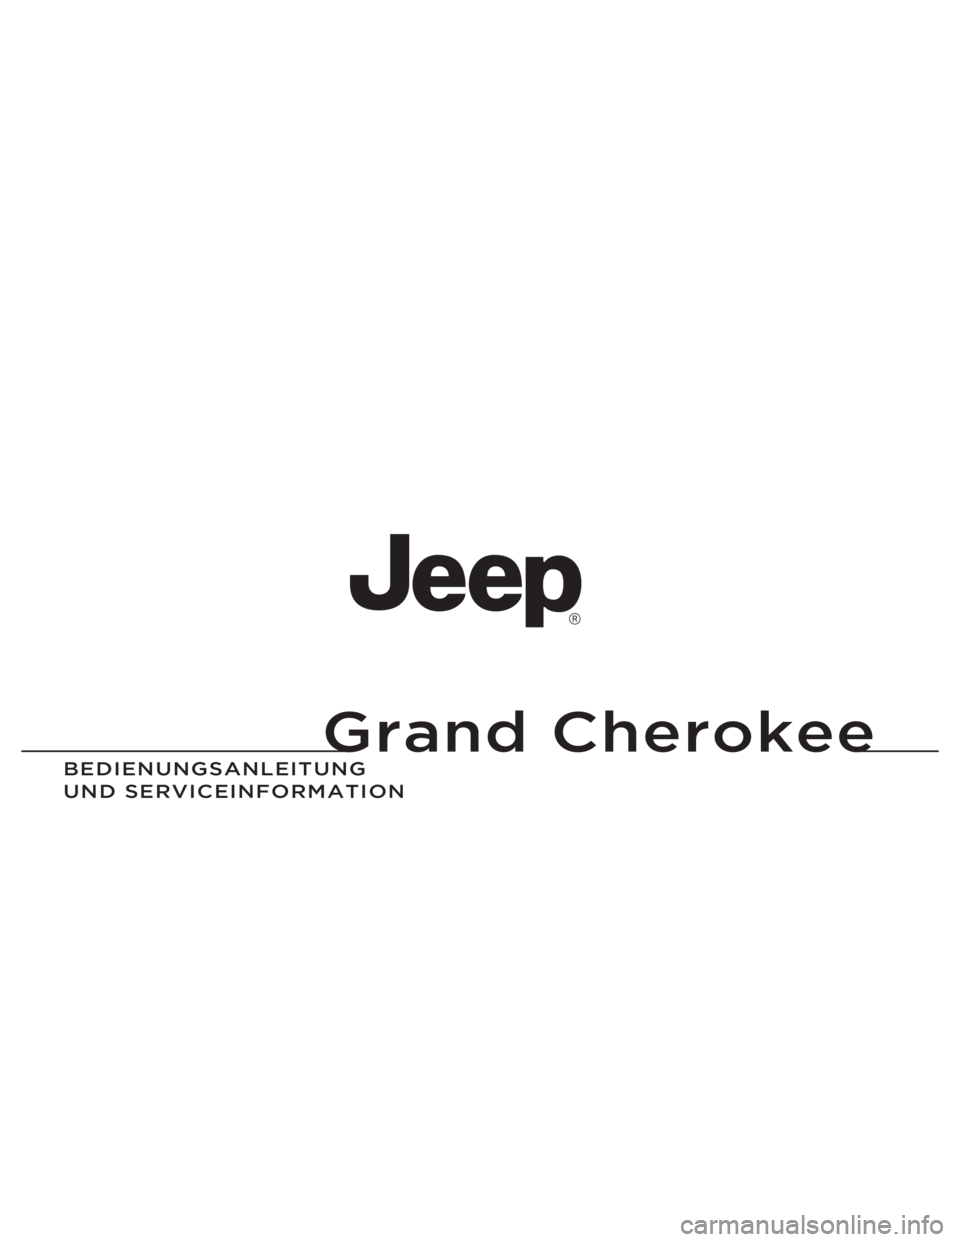 JEEP GRAND CHEROKEE 2013  Betriebsanleitung (in German) Grand Cherokee
BEDIENUNGSAN\fEITUNG\A 
UND SERVICEIN\bORMATIO\AN
Grand Cherokee
14WK741-126-GER-AAGedruckt in Europa 14 